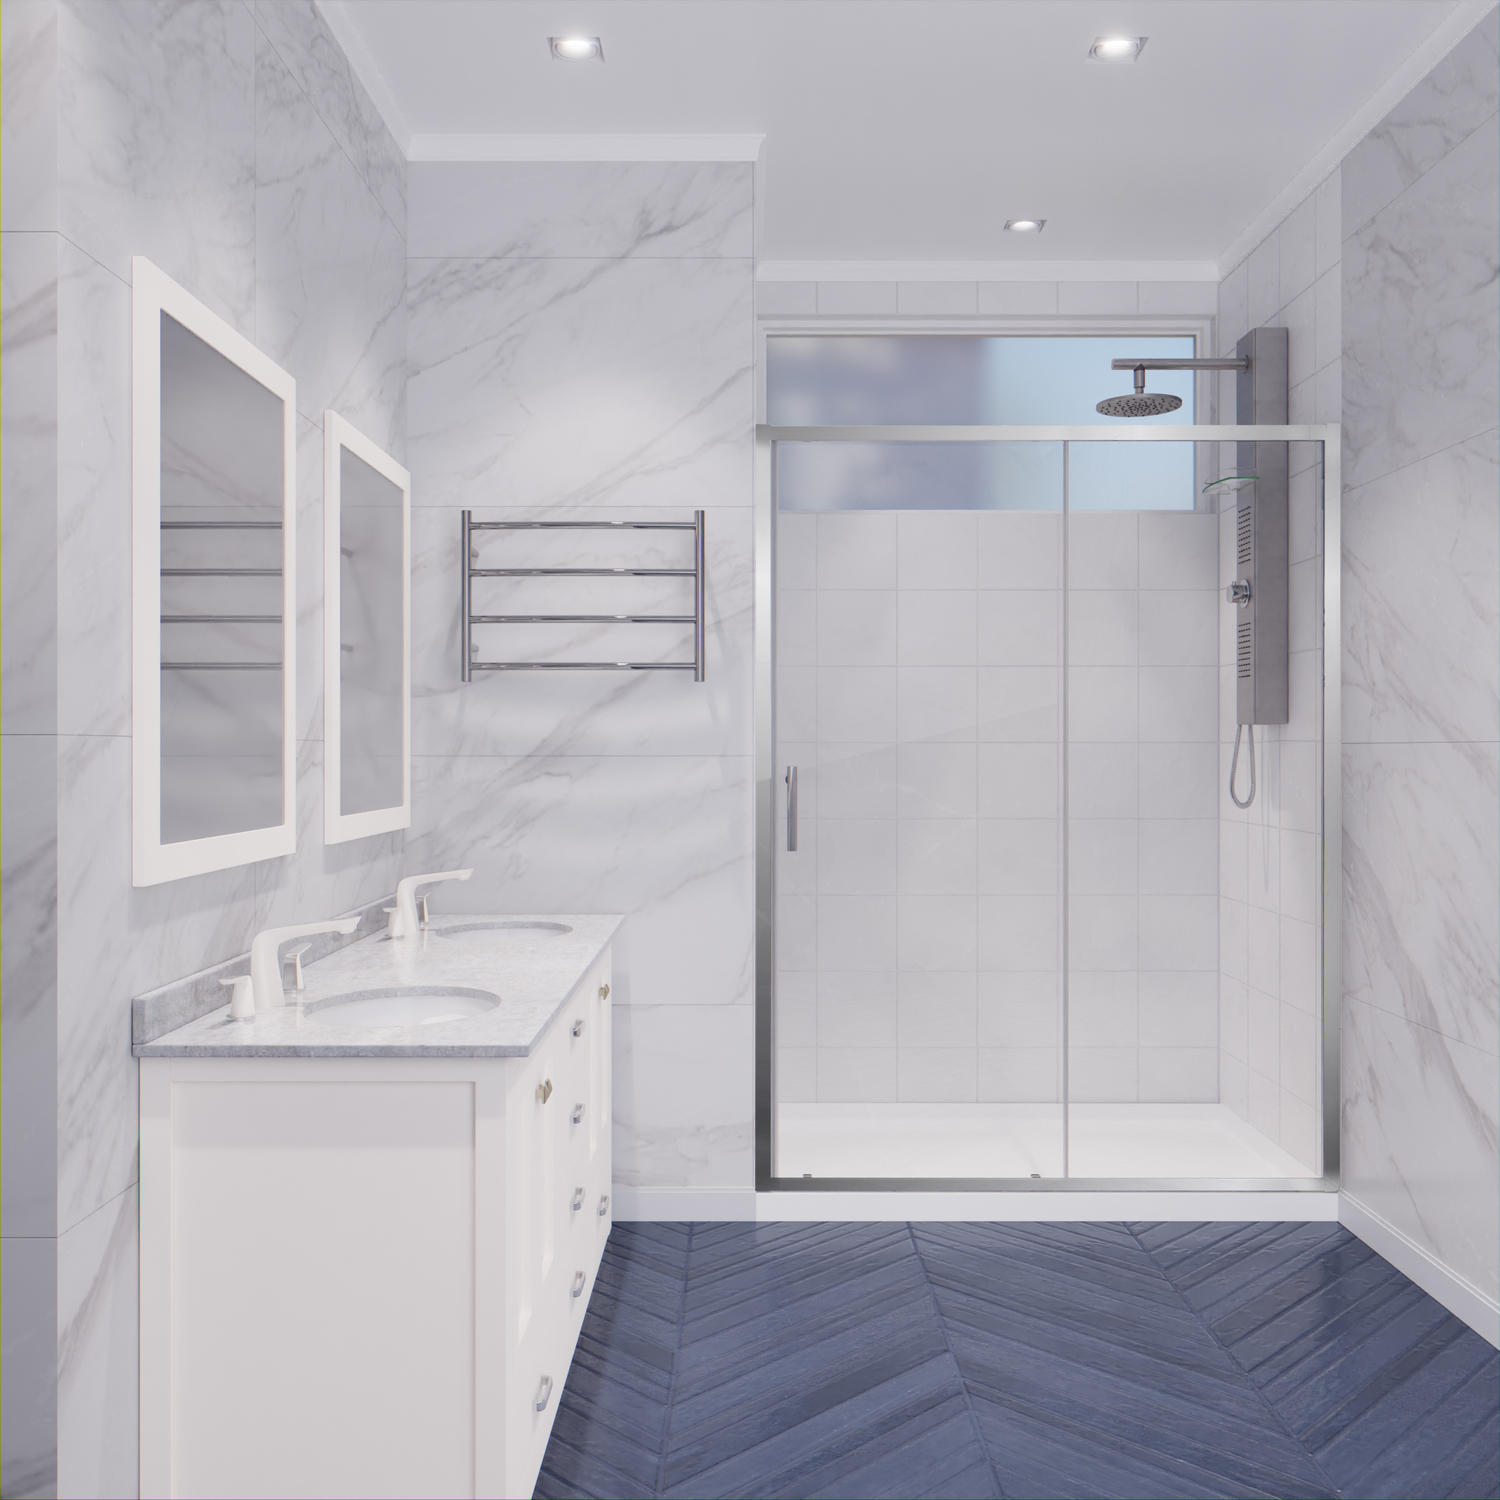 shower door and panel Anzzi SHOWER - Shower Doors - Sliding Chrome